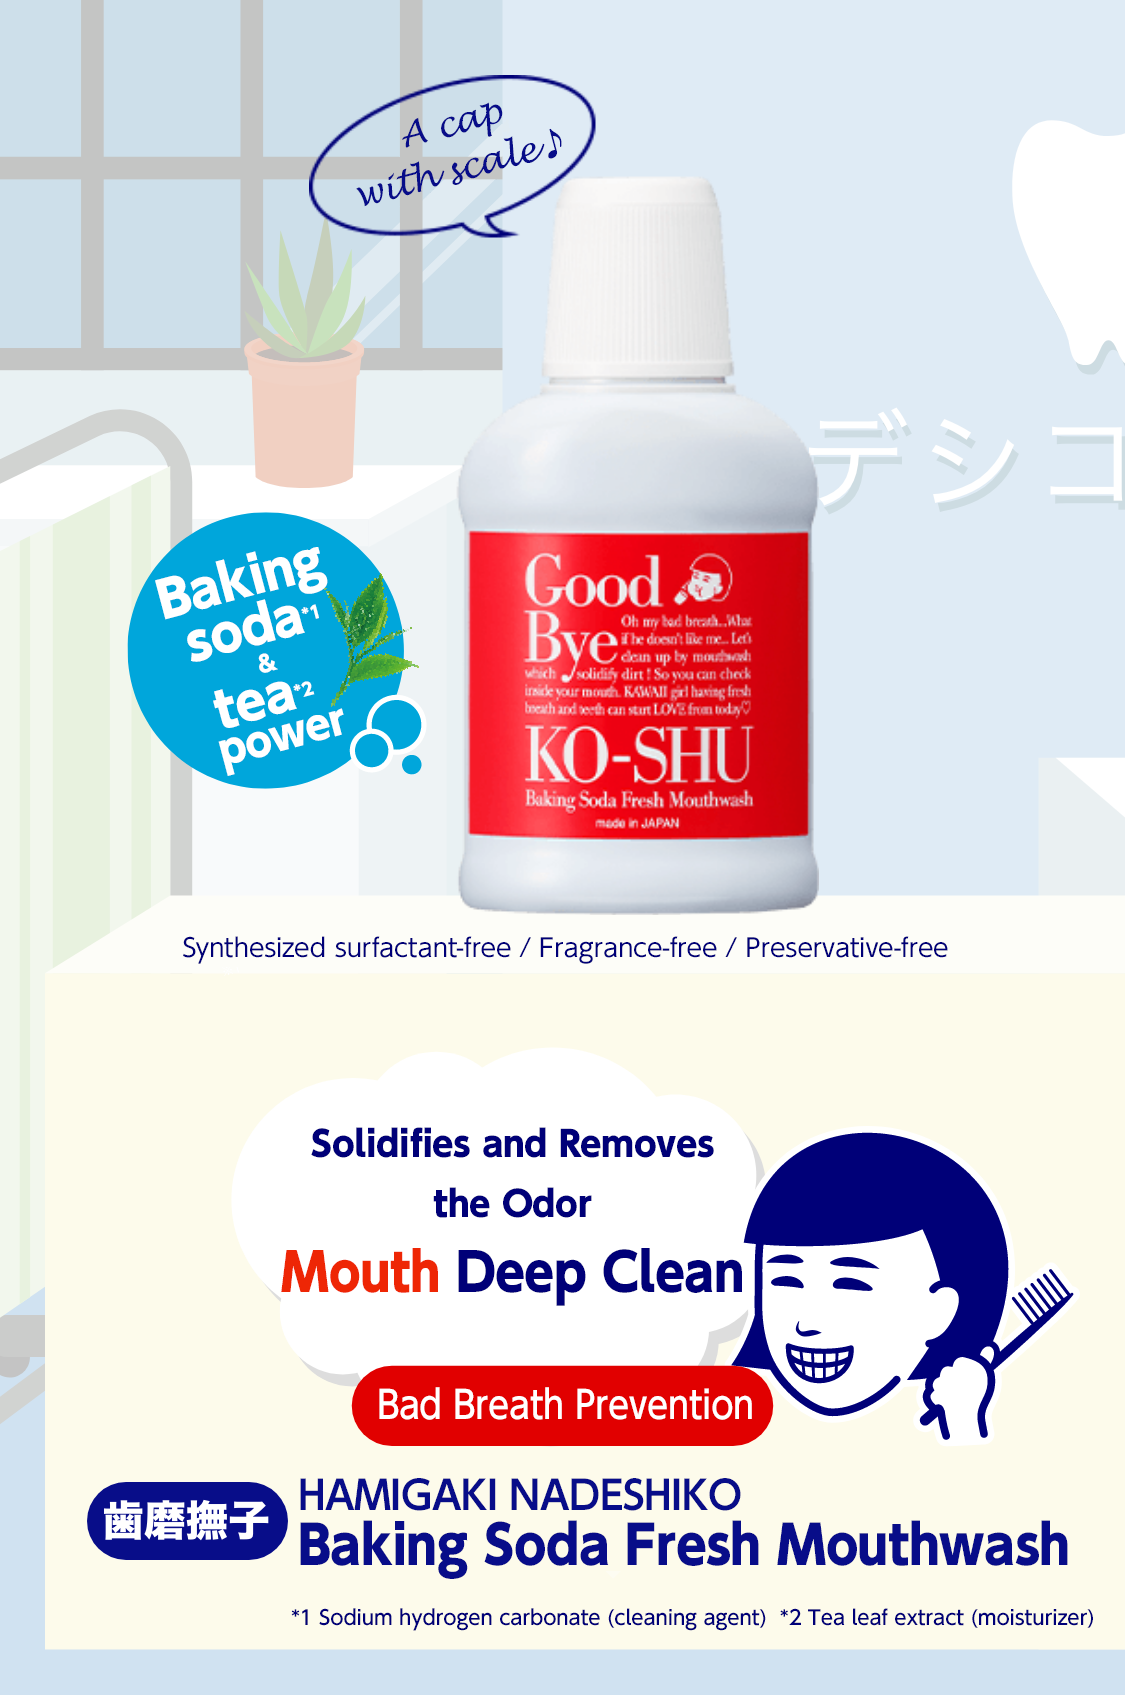 HAMIGAKI NADESHIKO Baking Soda Fresh Mouthwash